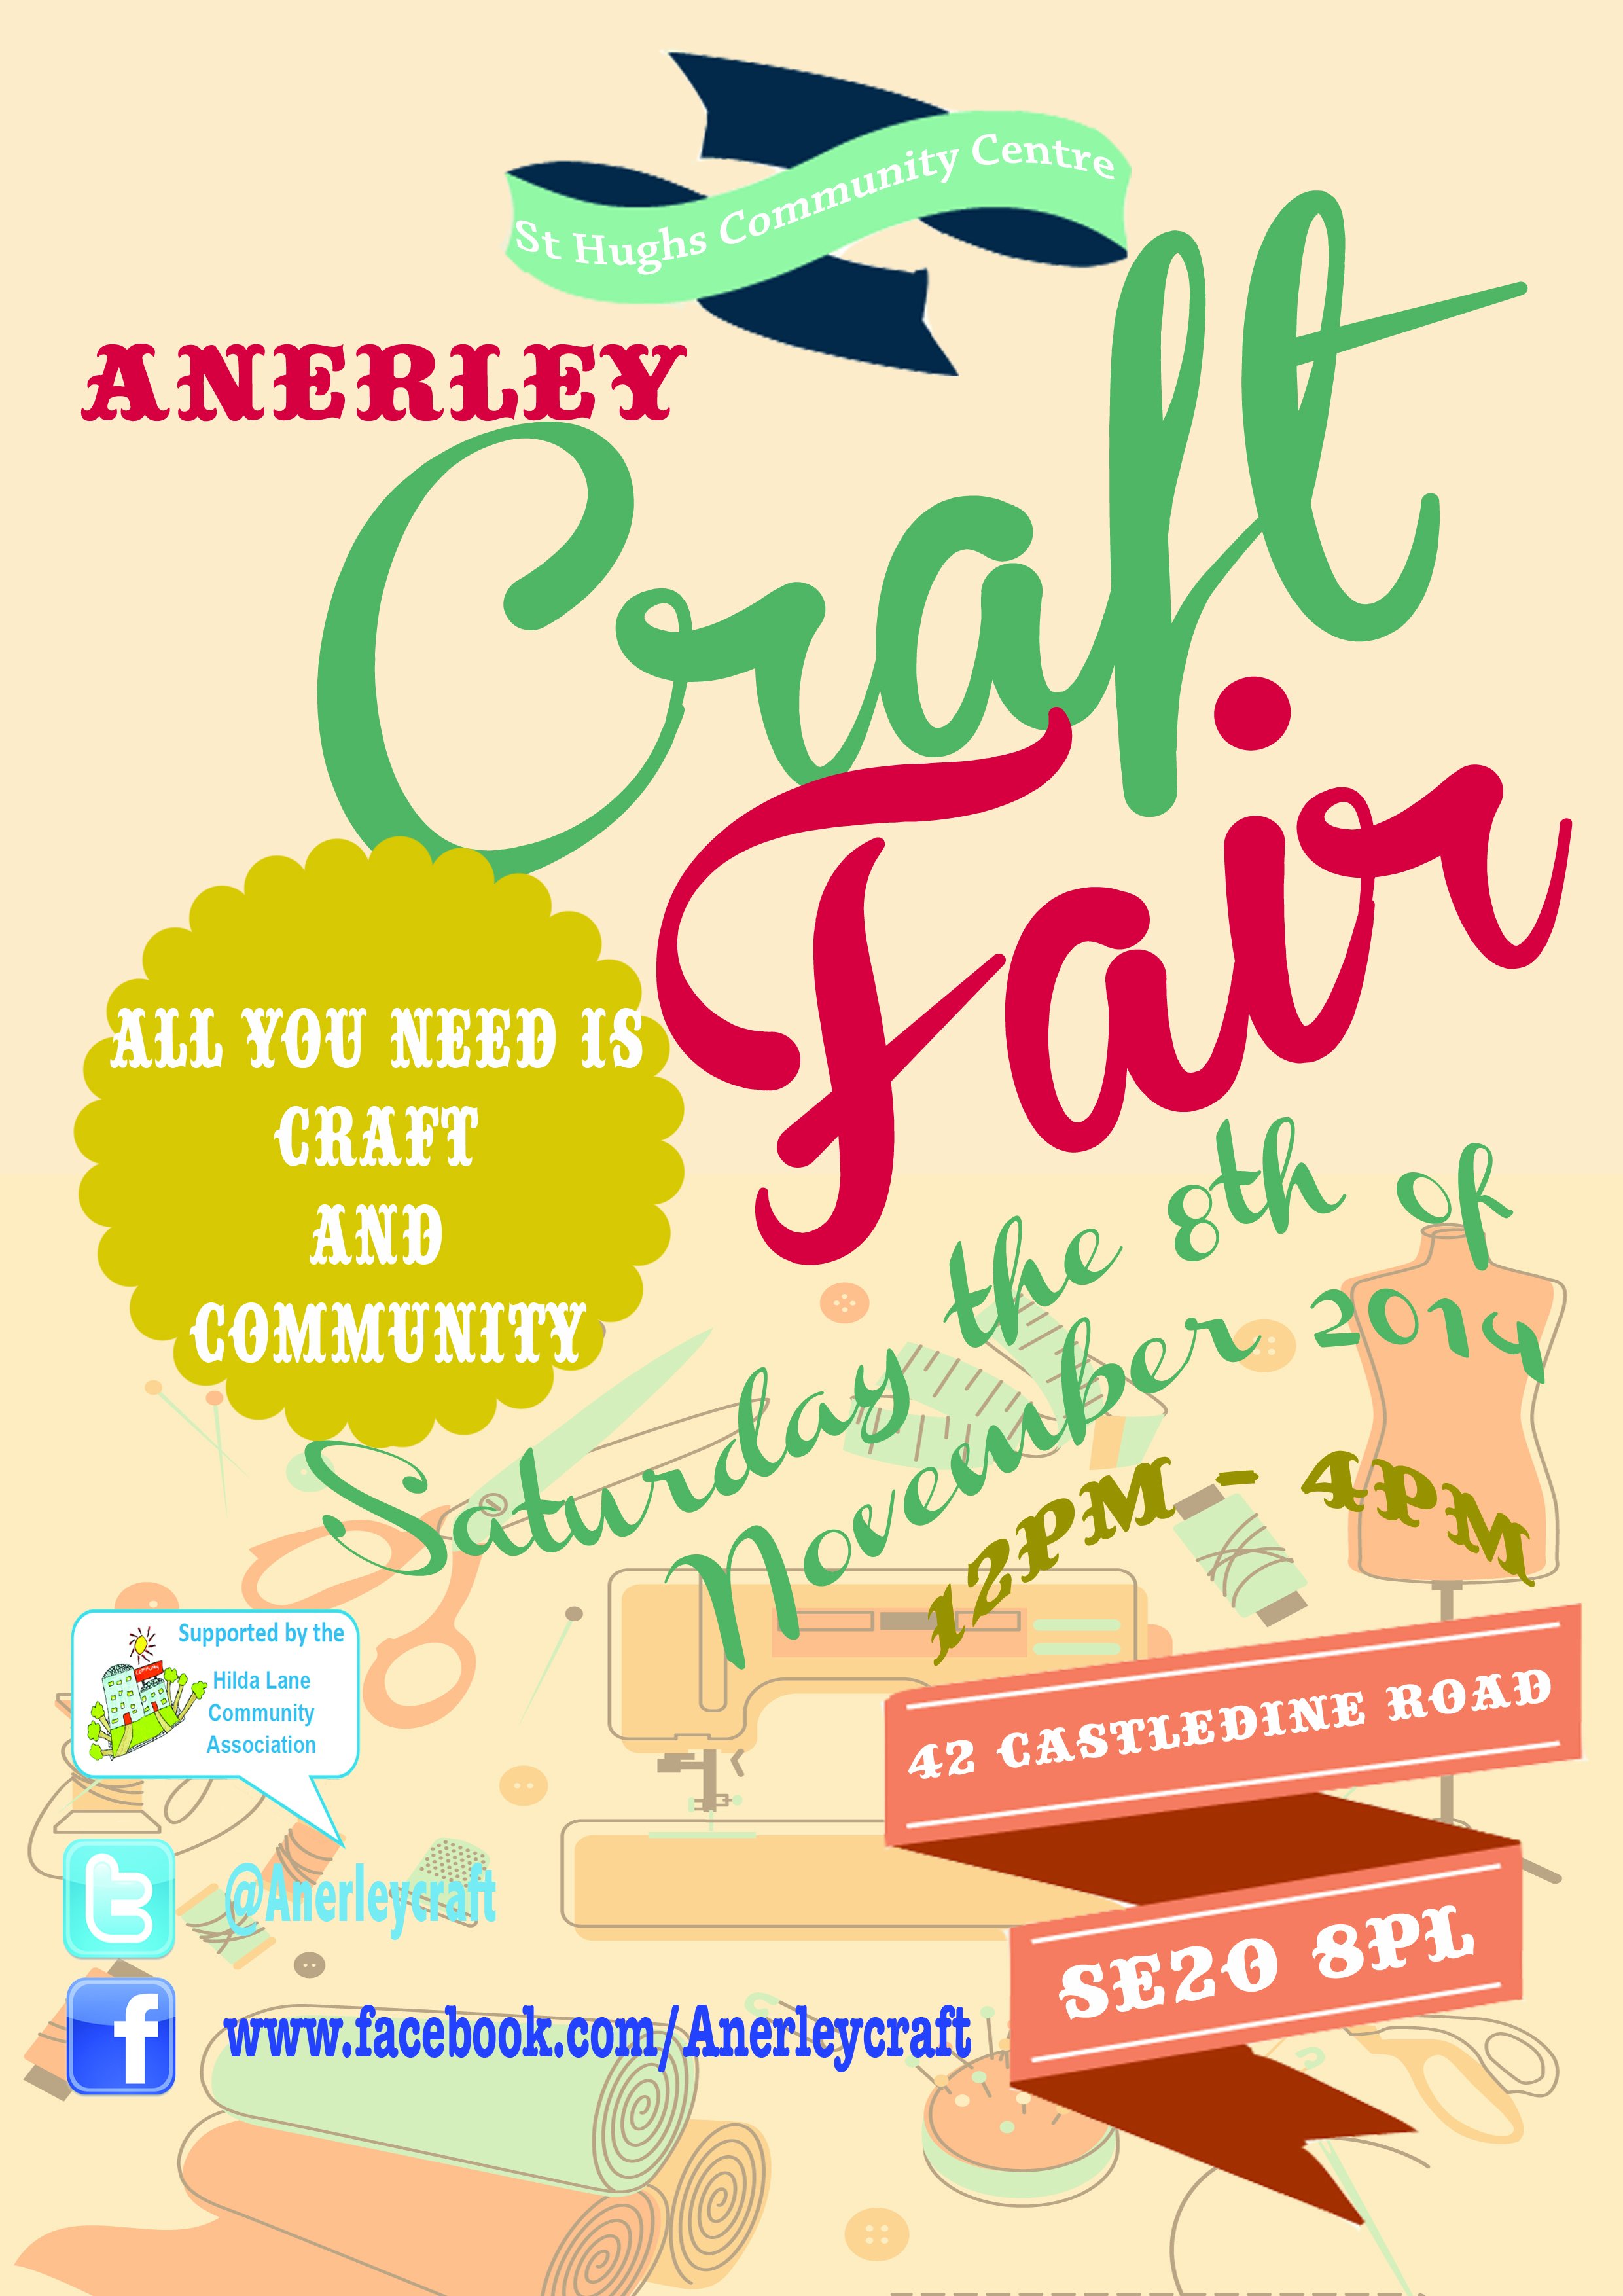 Anerley Craft Fair - Saturday 8th November 2014 - Midday to 4pm